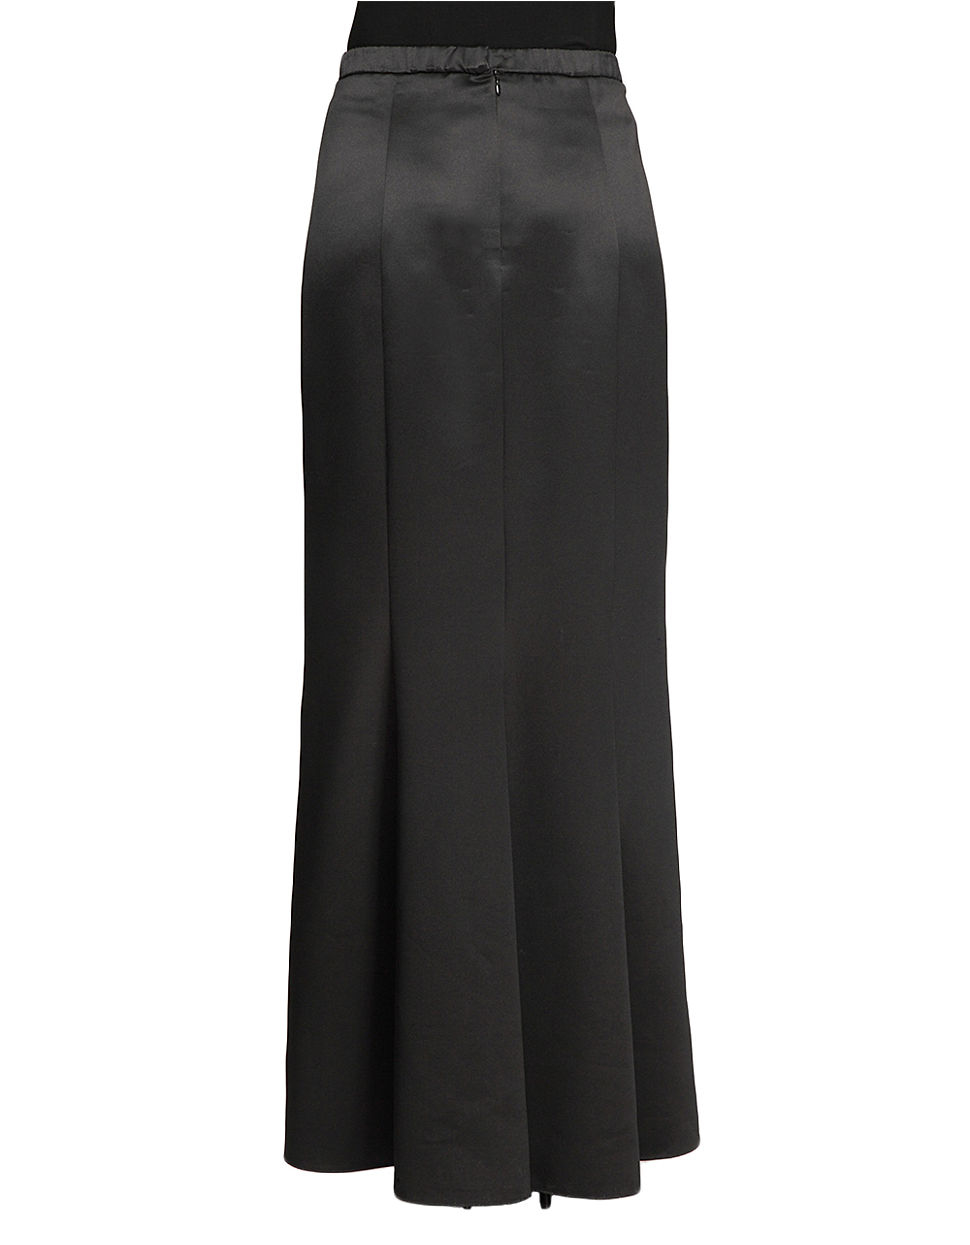 Alex evenings Fishtail Back Maxi Skirt in Black | Lyst